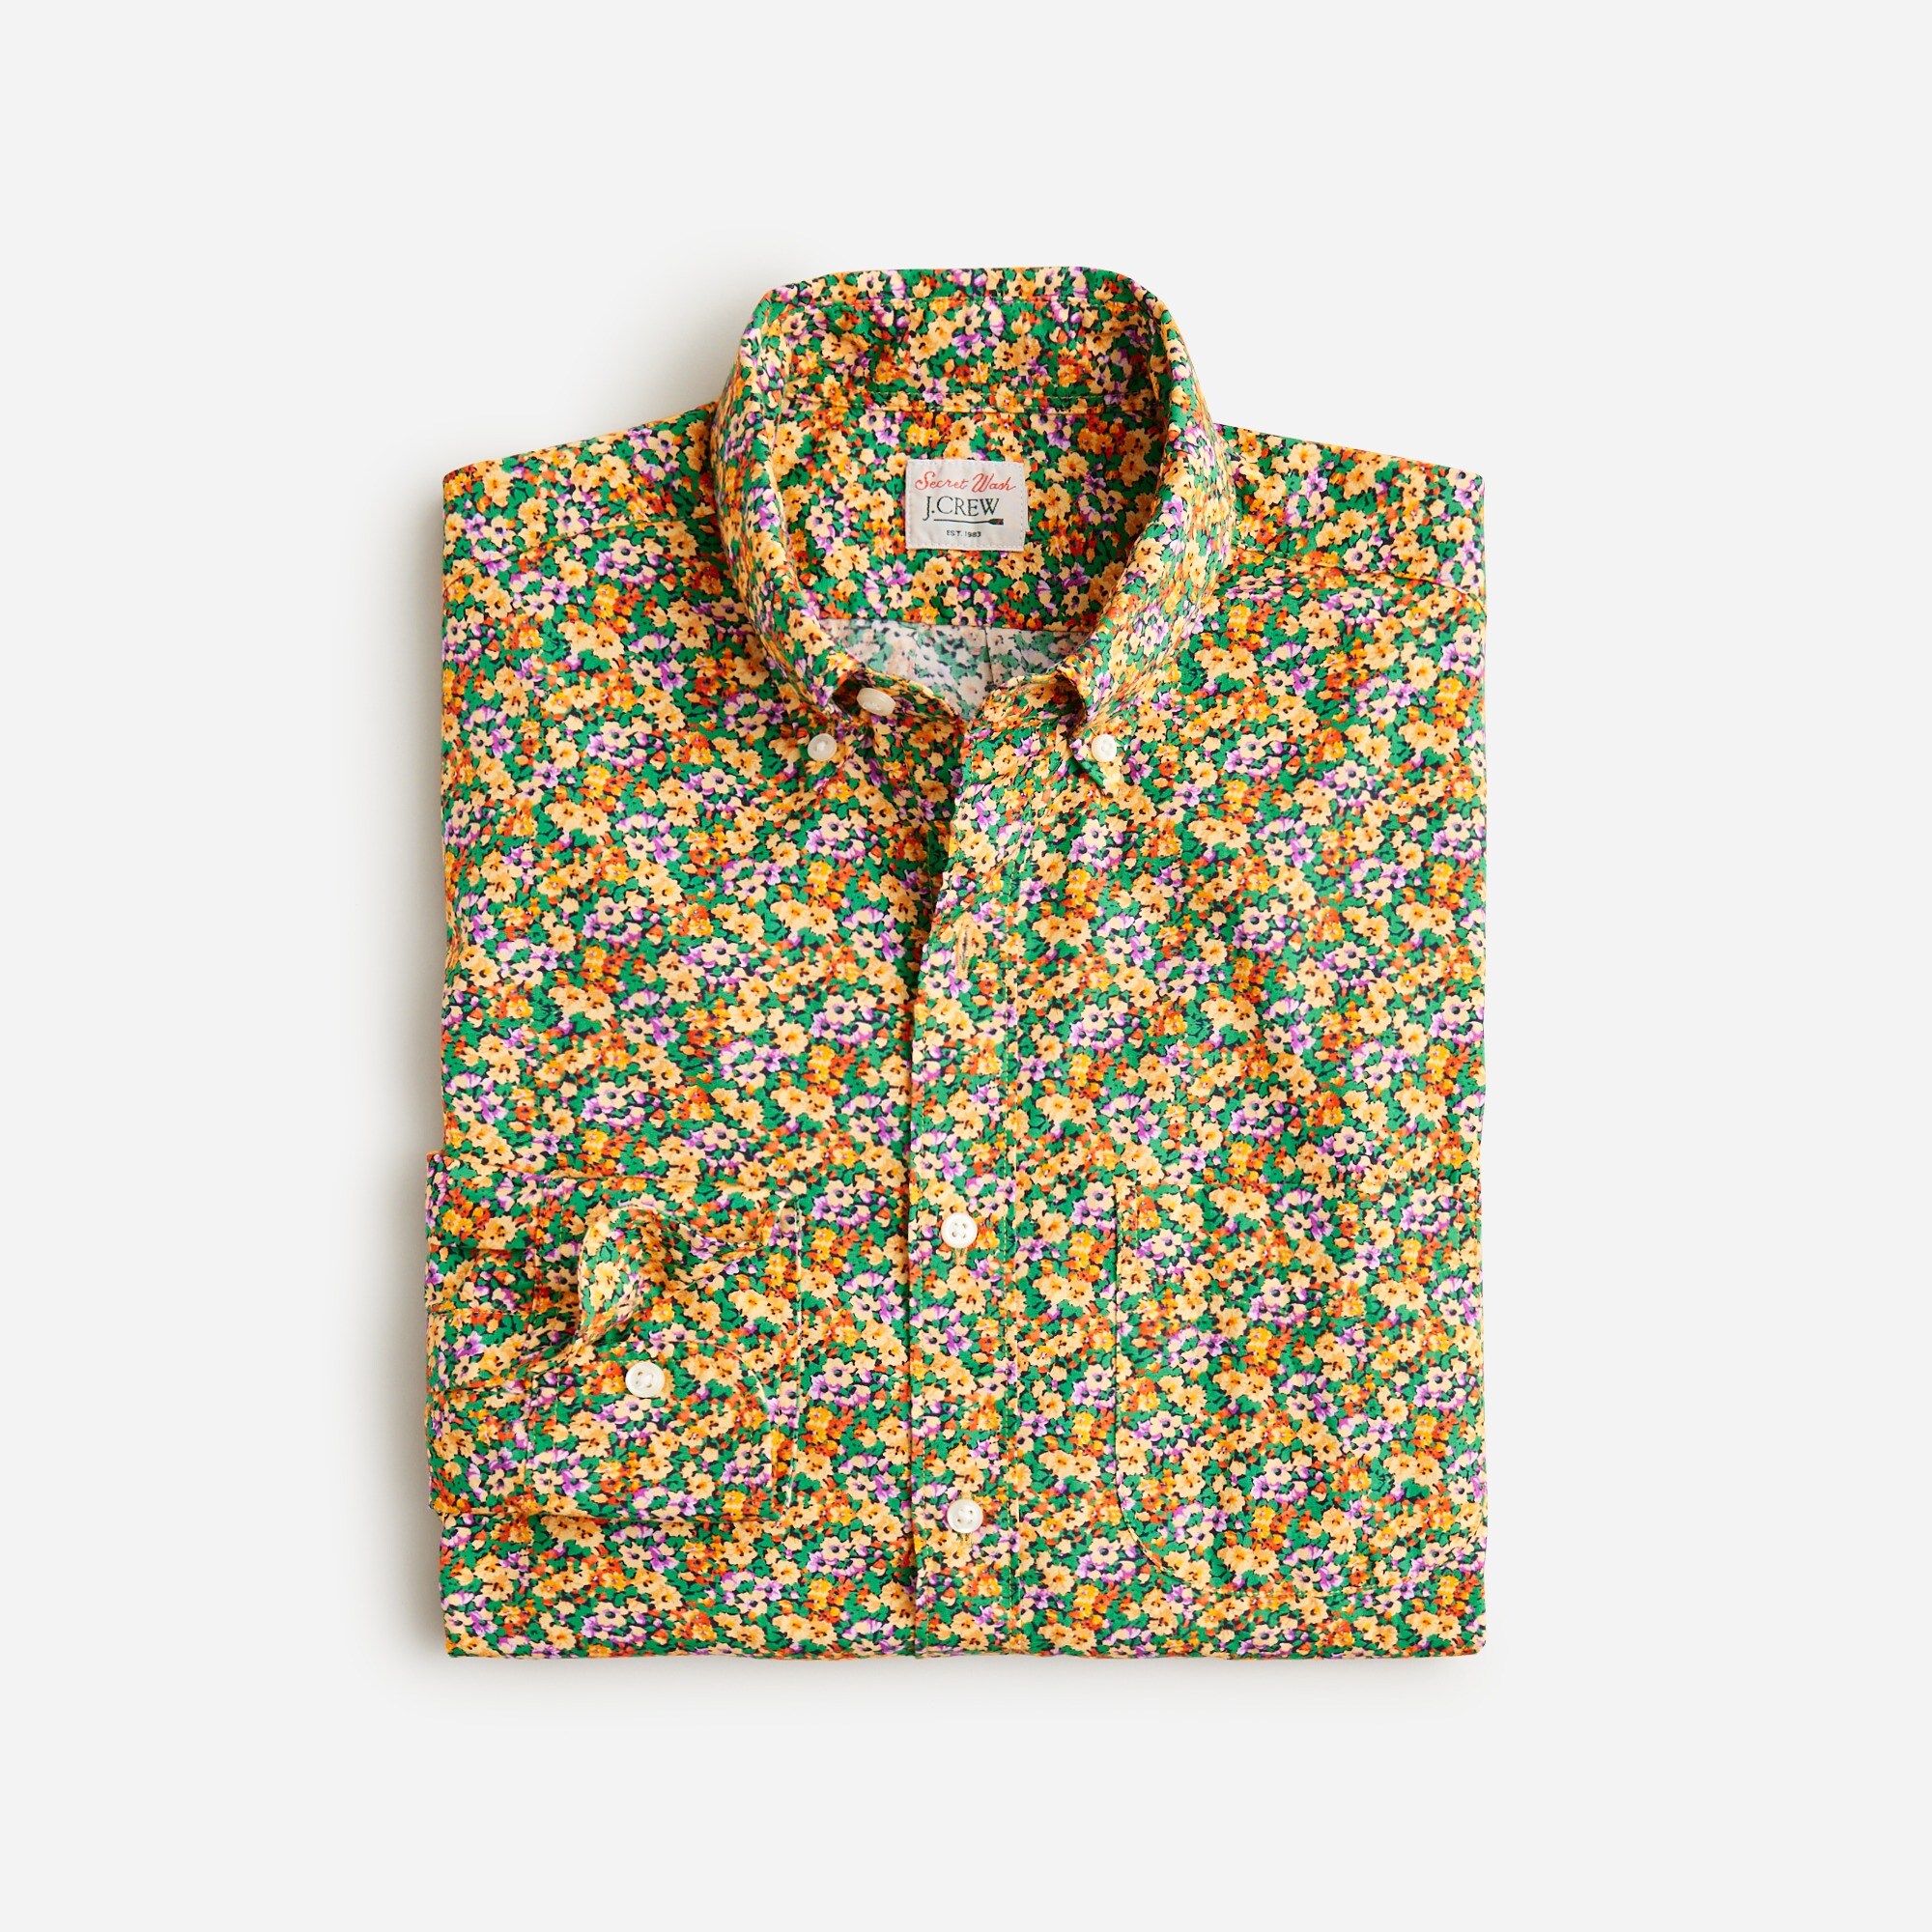  Relaxed Secret Wash cotton poplin shirt in print